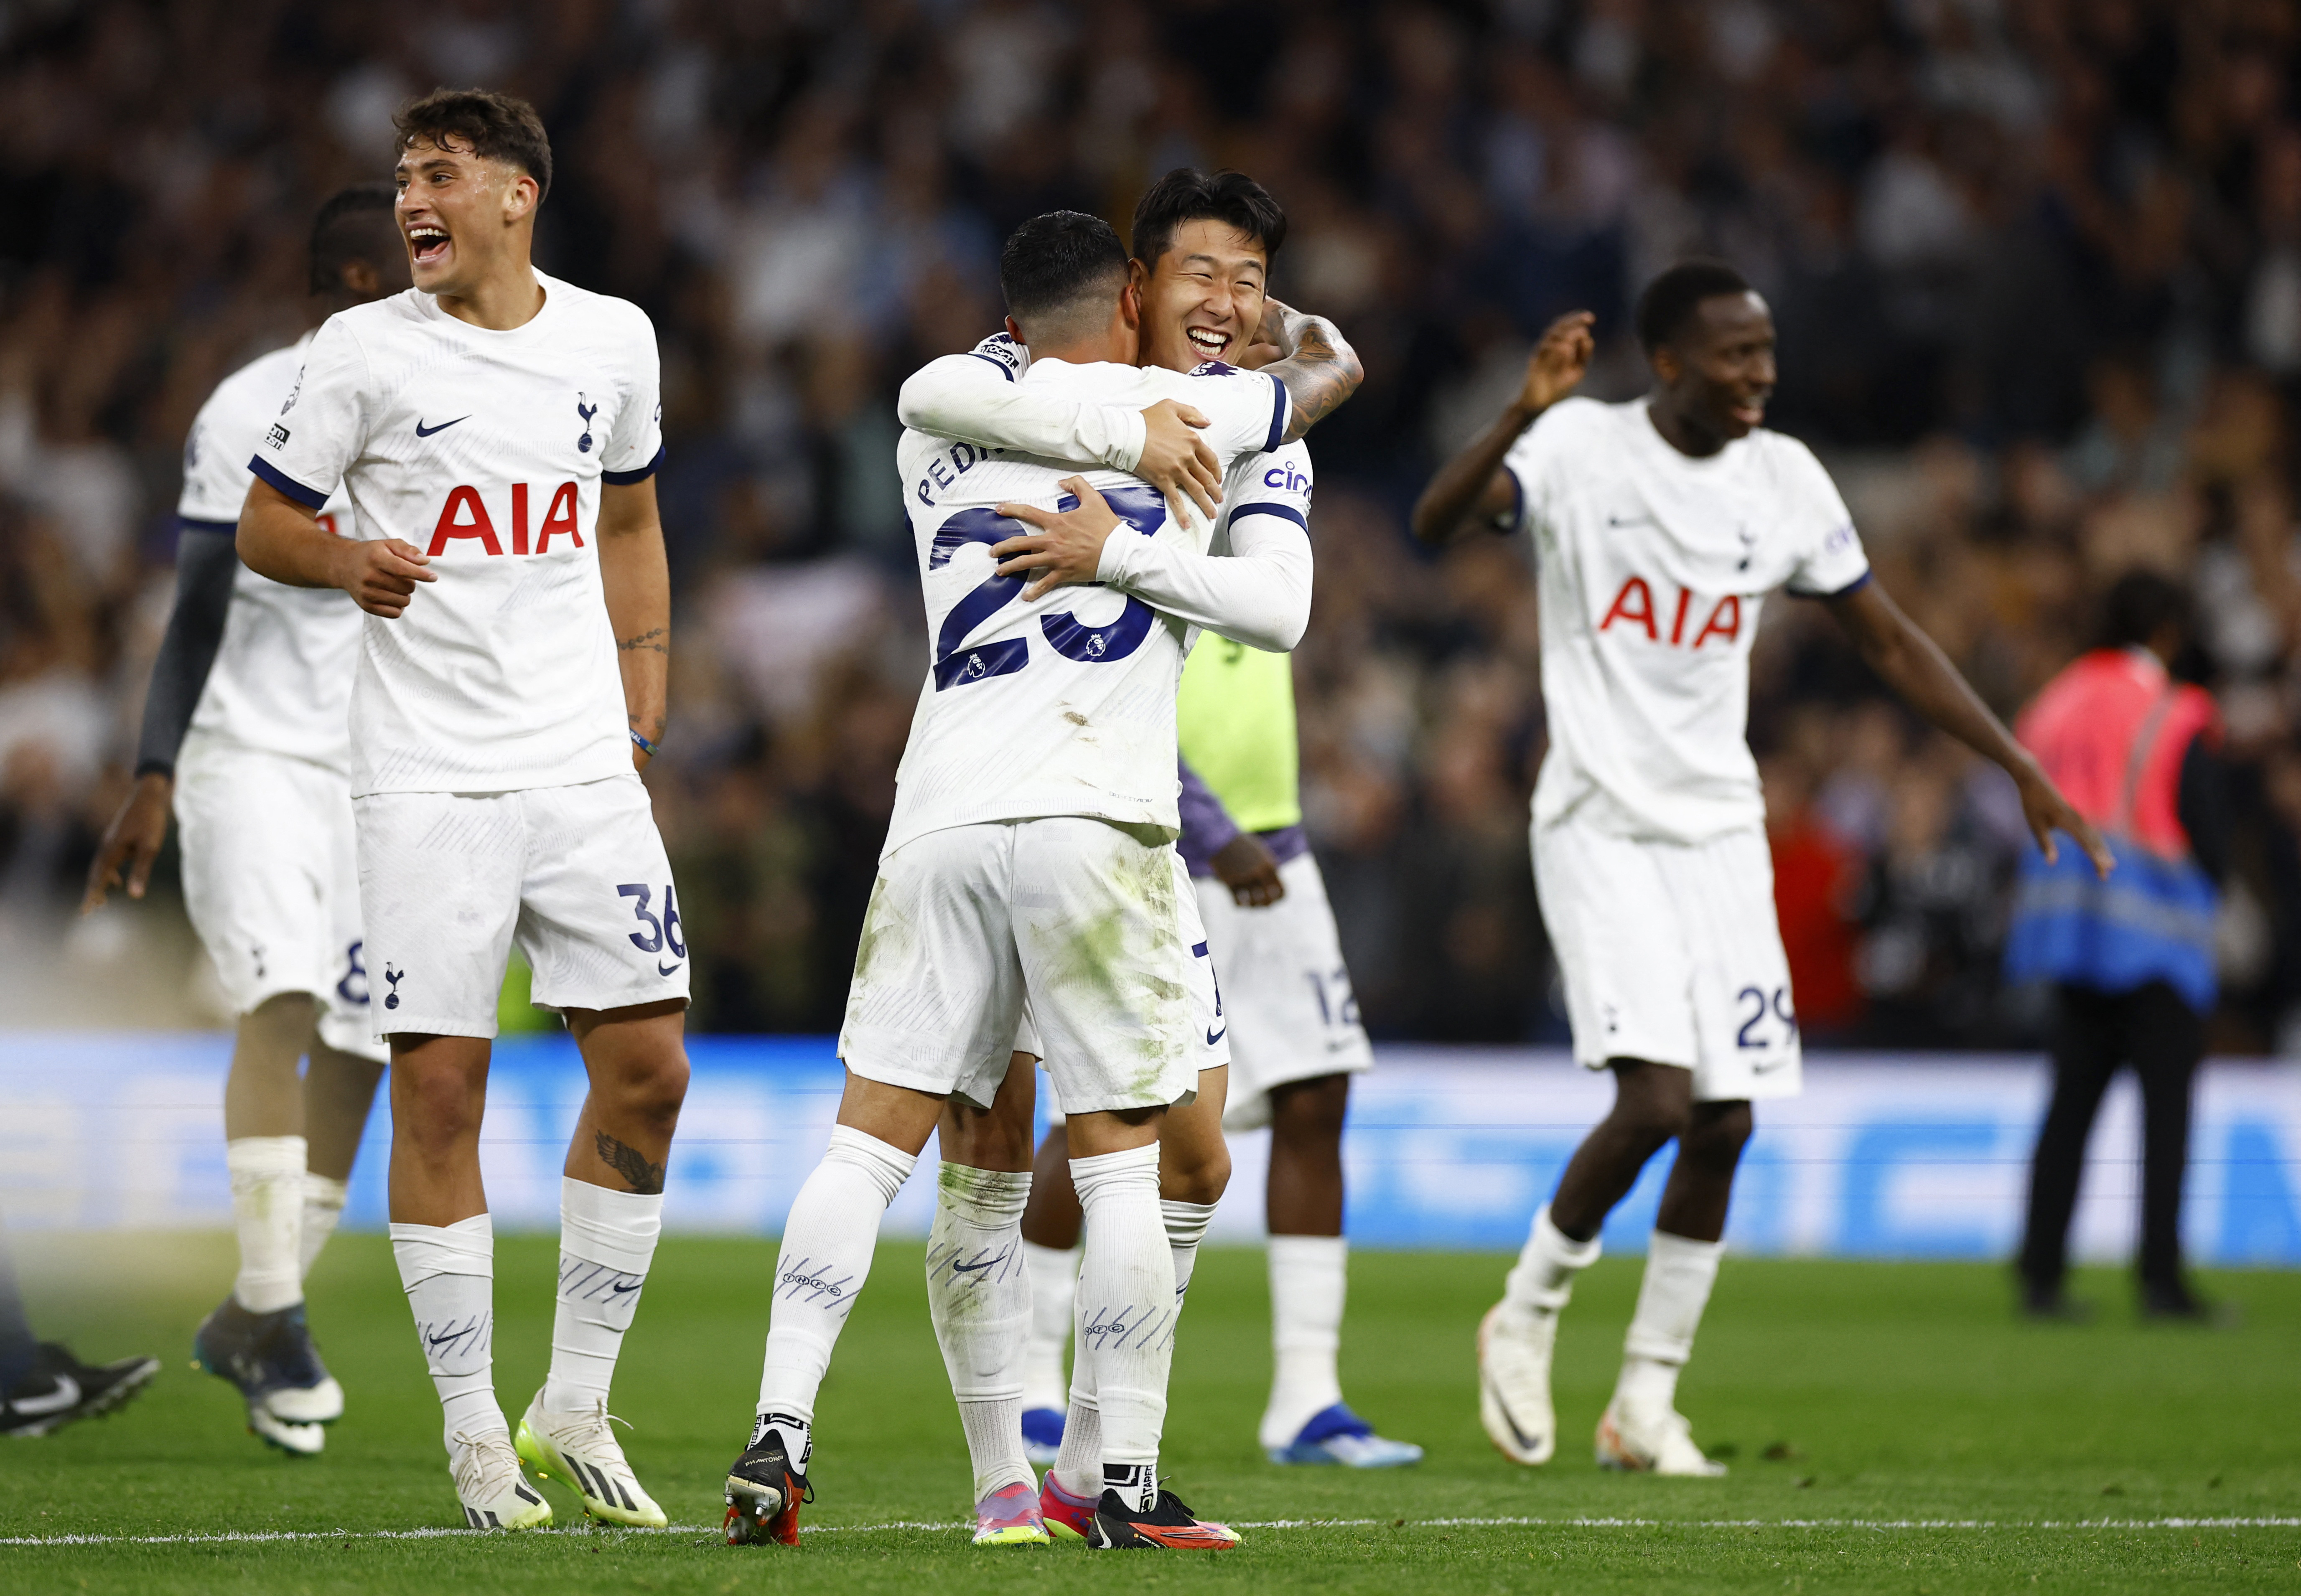 Tottenham Hotspur 2-1 Sheffield United – report